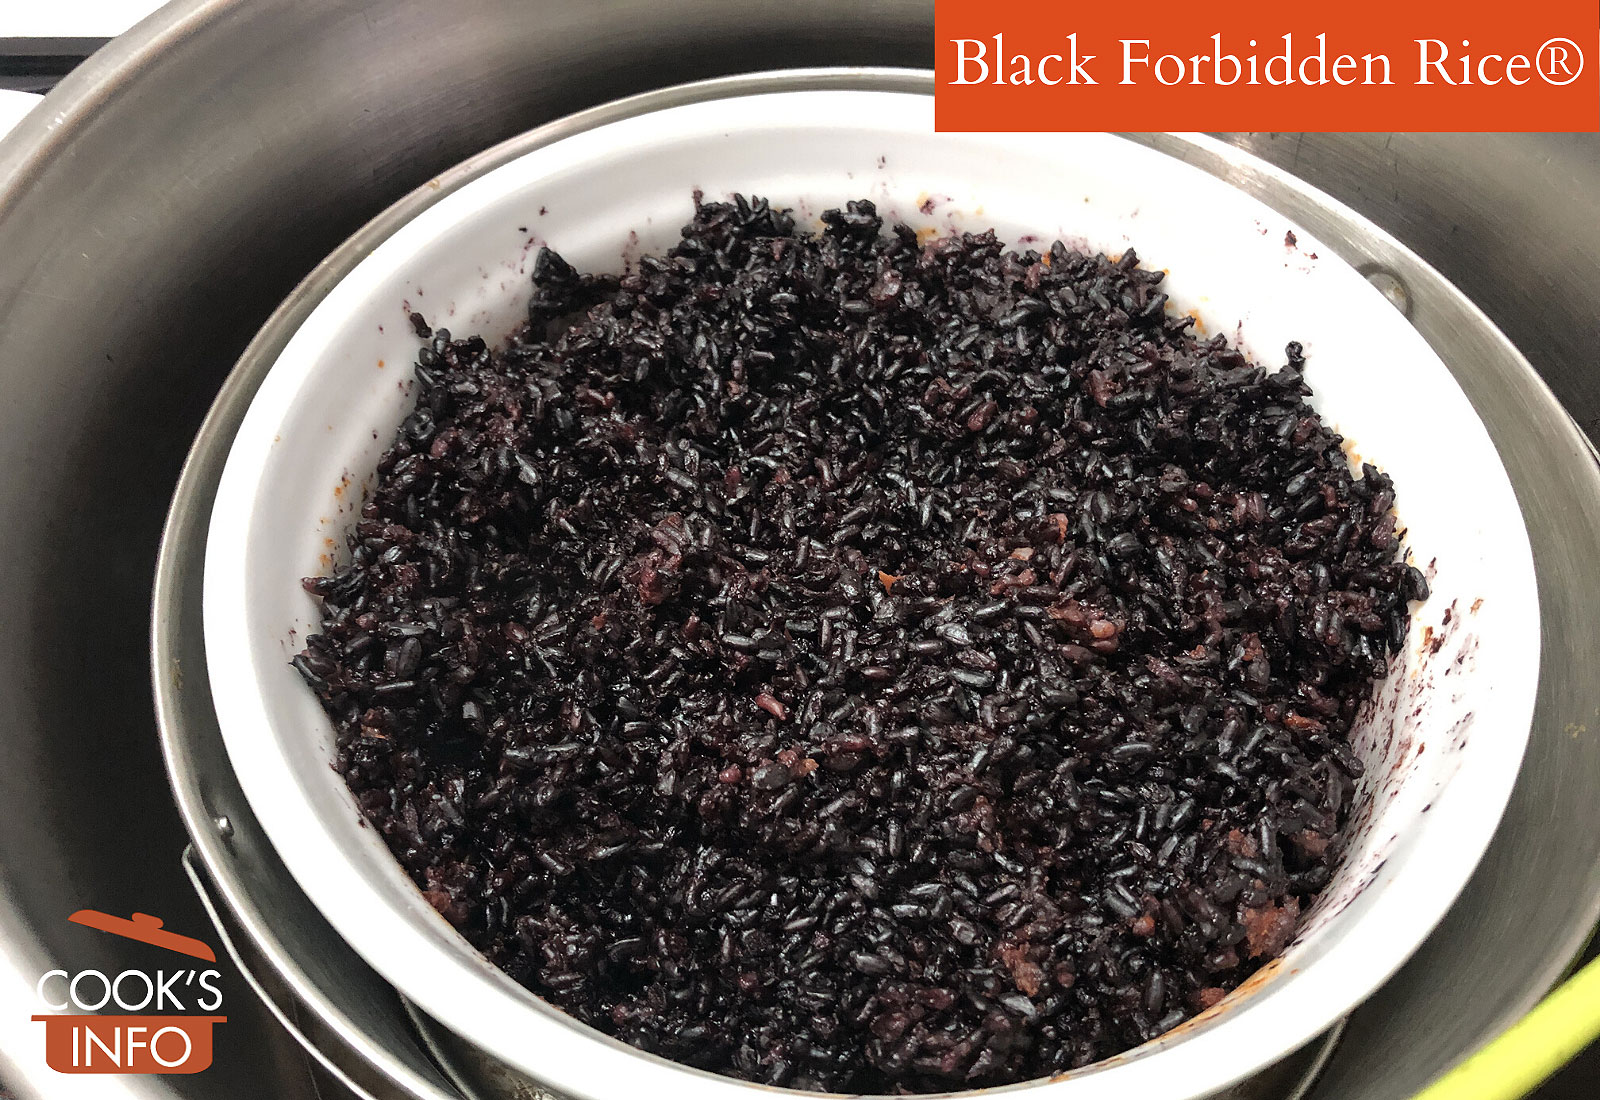 Steamed black forbidden rice